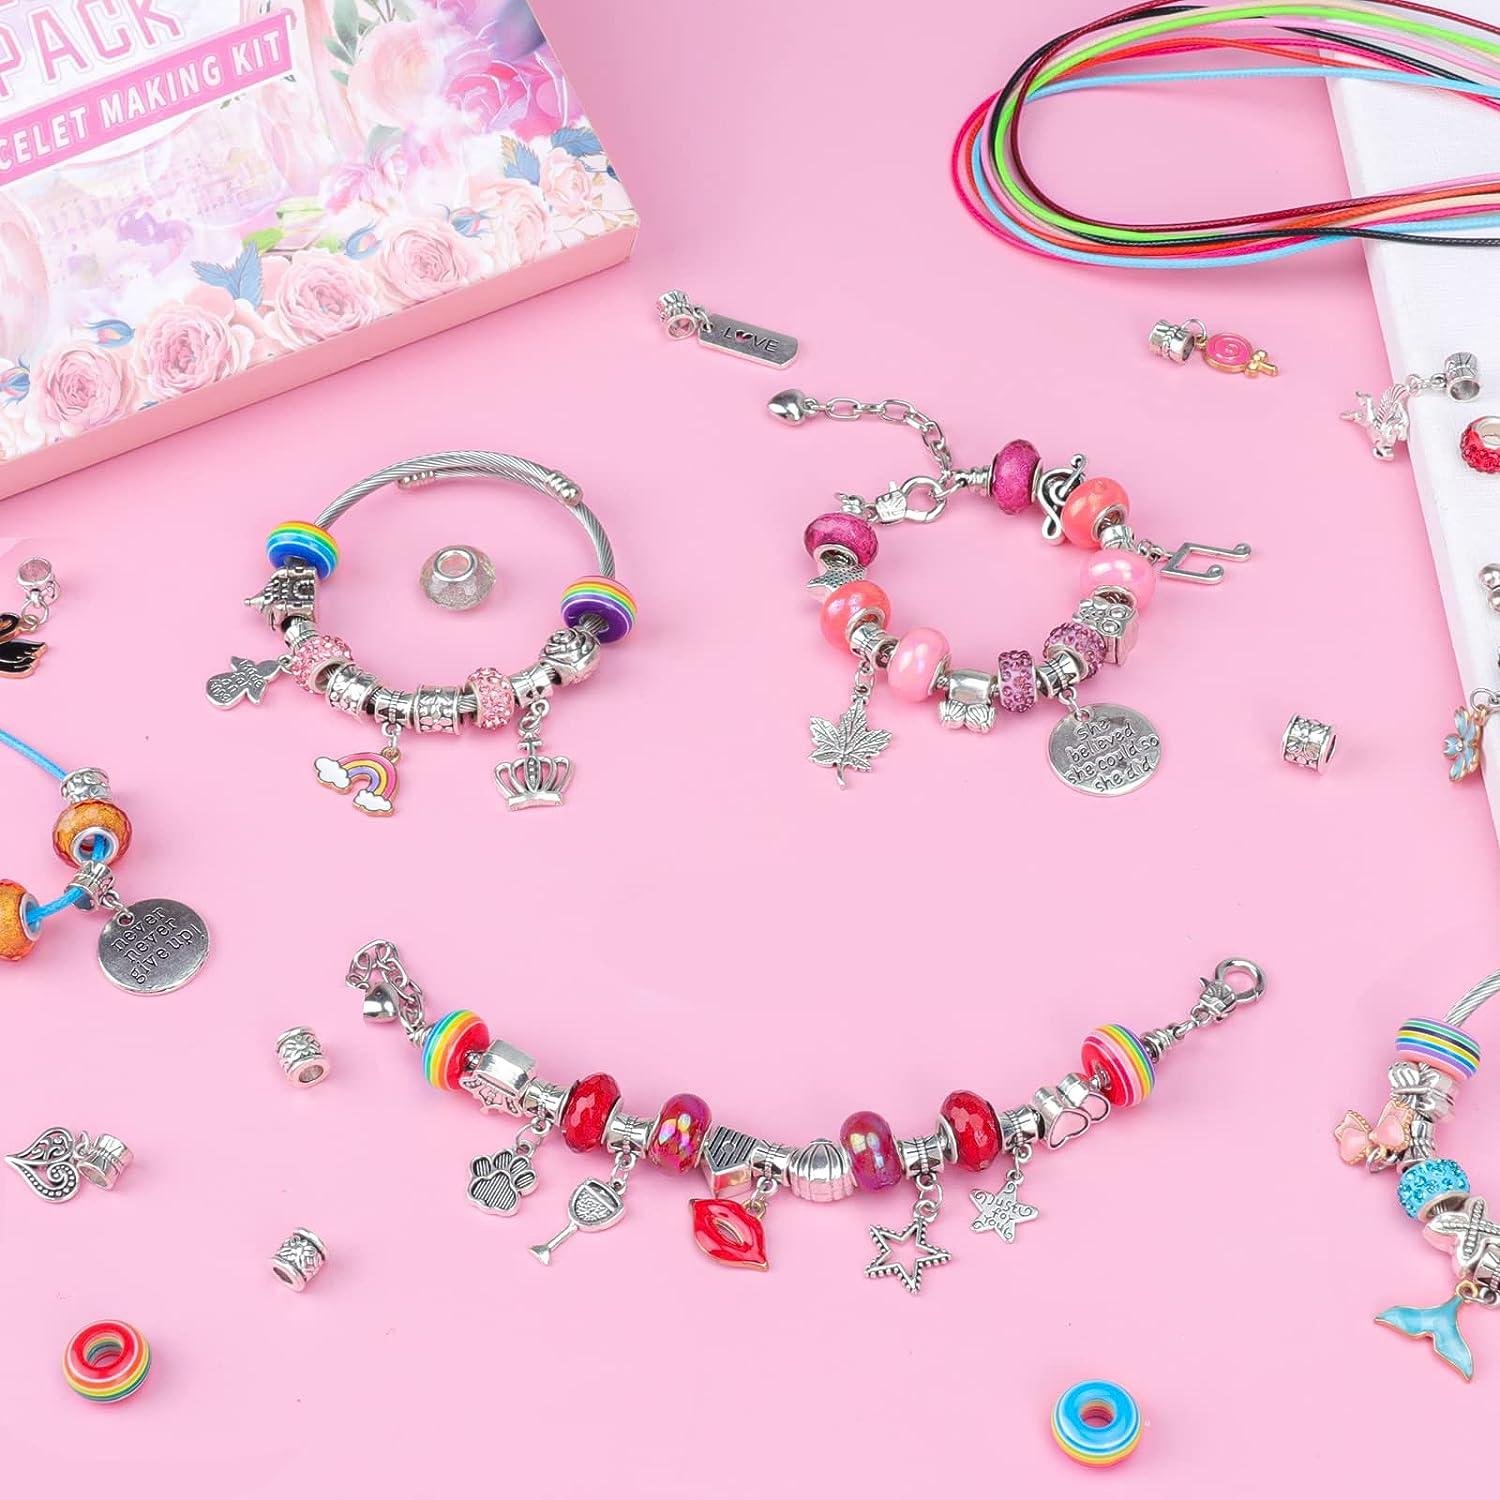 Charm Bracelet Making Kit for Girls 115PCS Jewelry Making Kit with